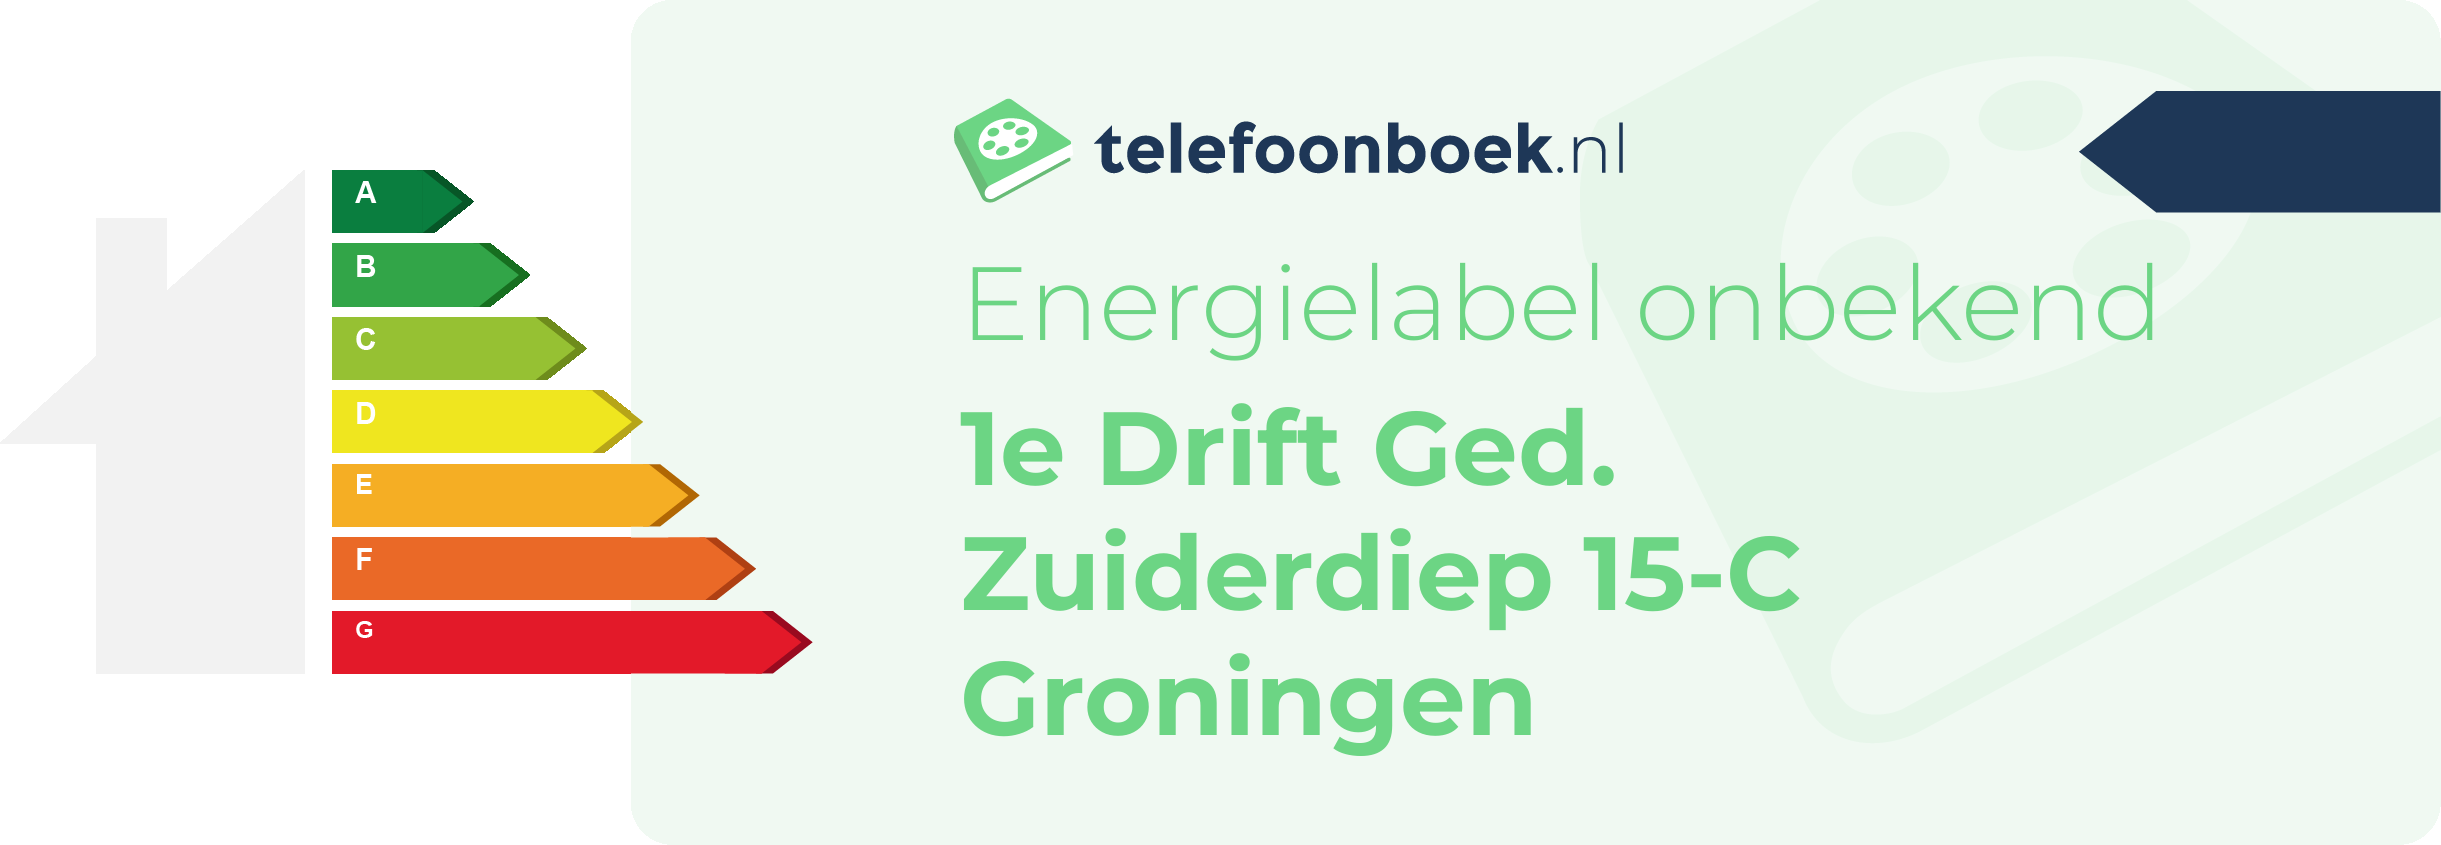 Energielabel 1e Drift Ged. Zuiderdiep 15-C Groningen